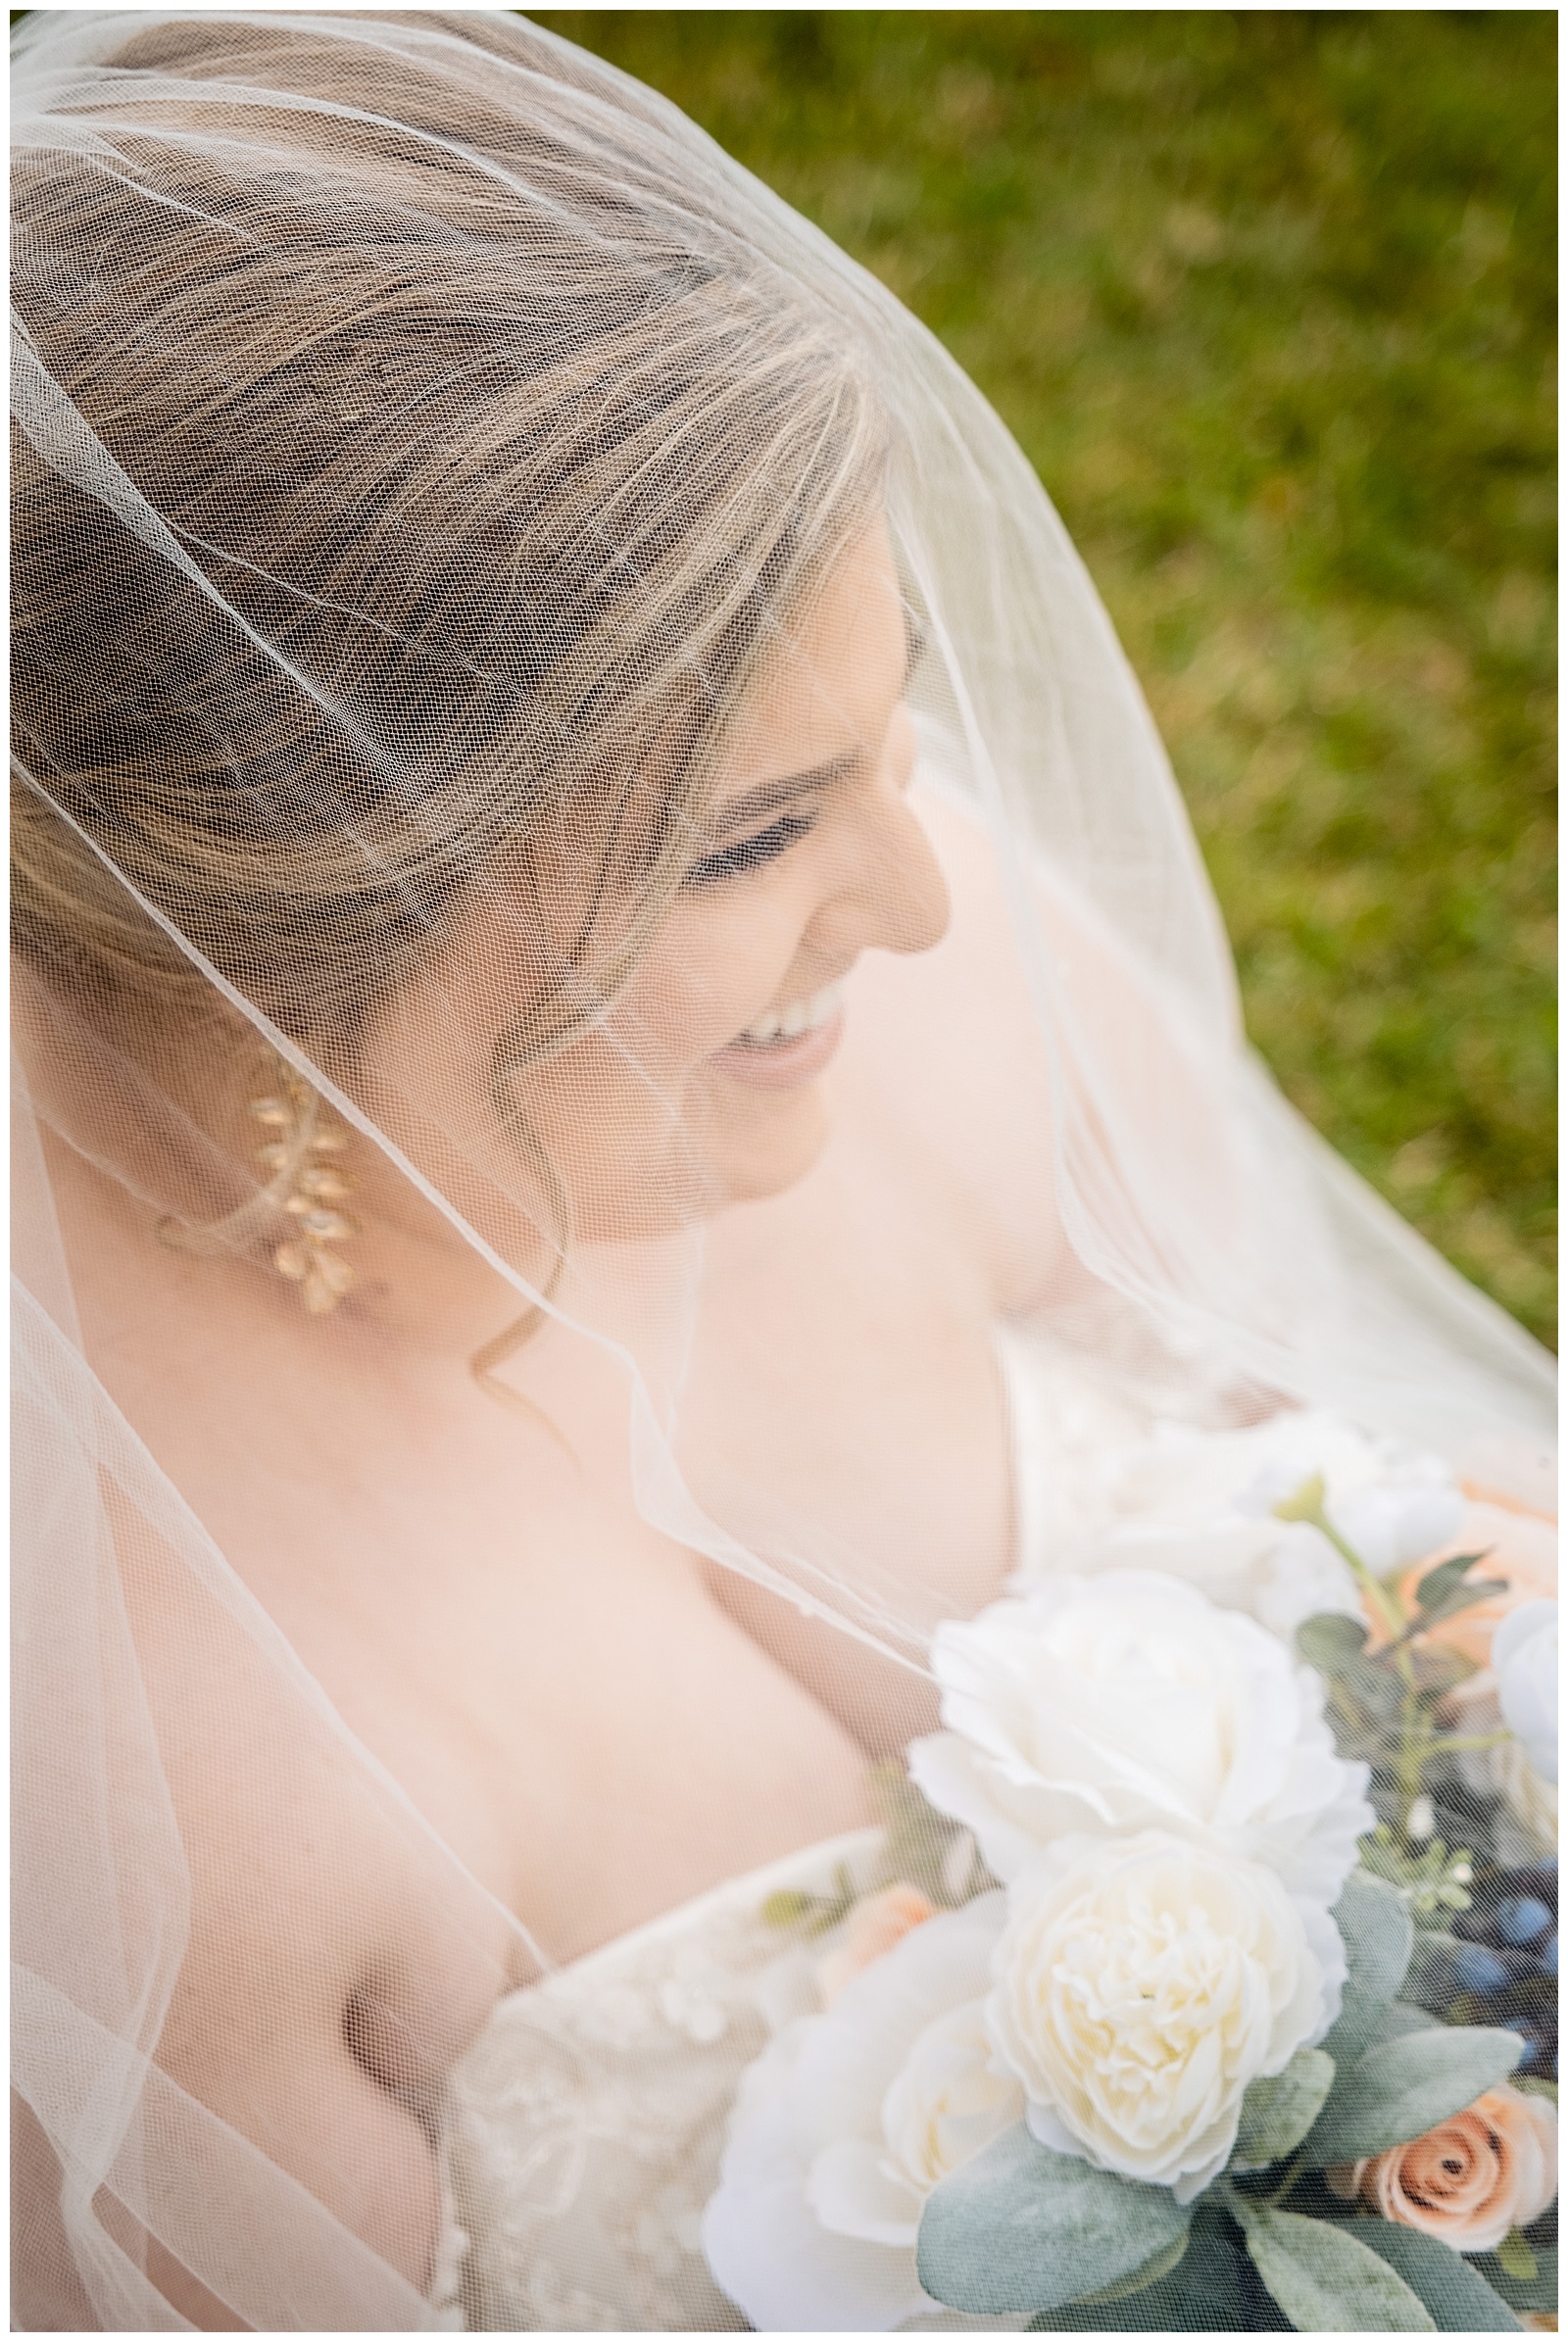 bride laughing under wedding veil for portrait photo at Barton Arboretum Trail